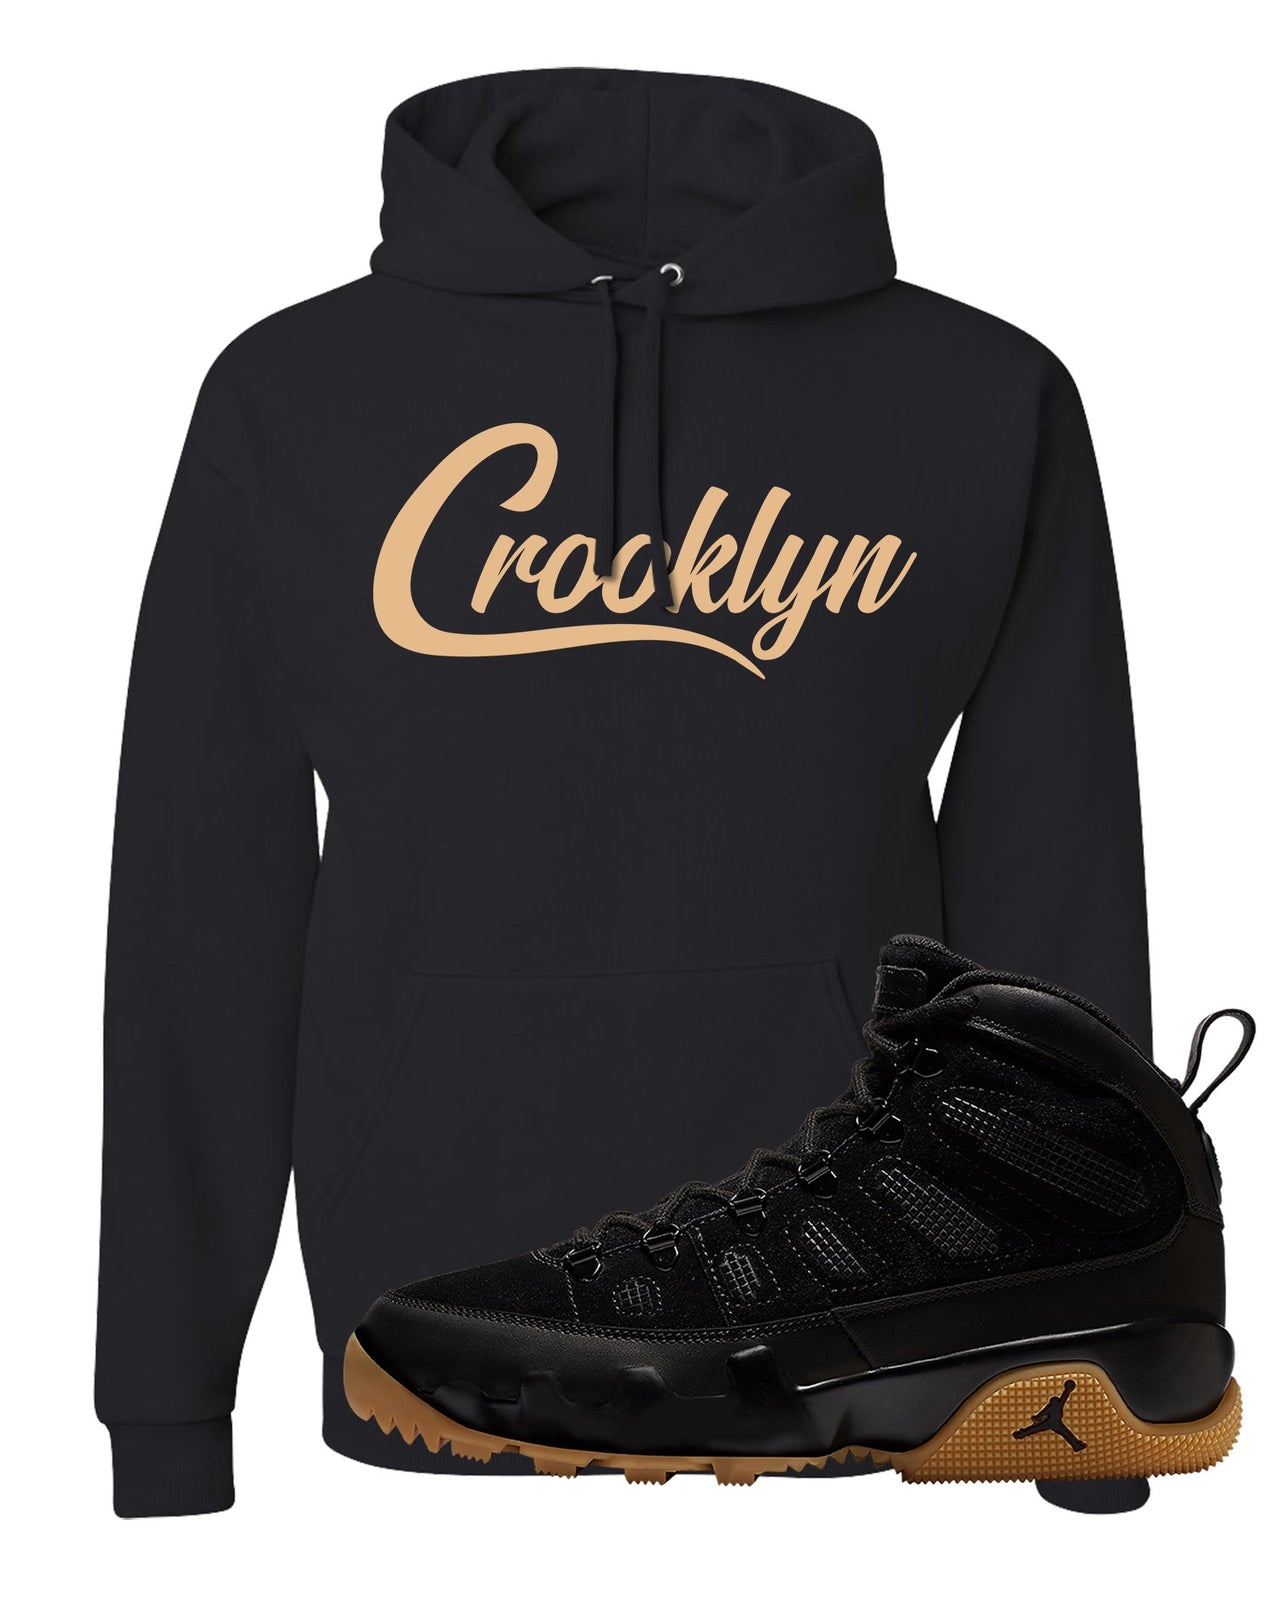 NRG Black Gum Boot 9s Hoodie | Crooklyn, Black